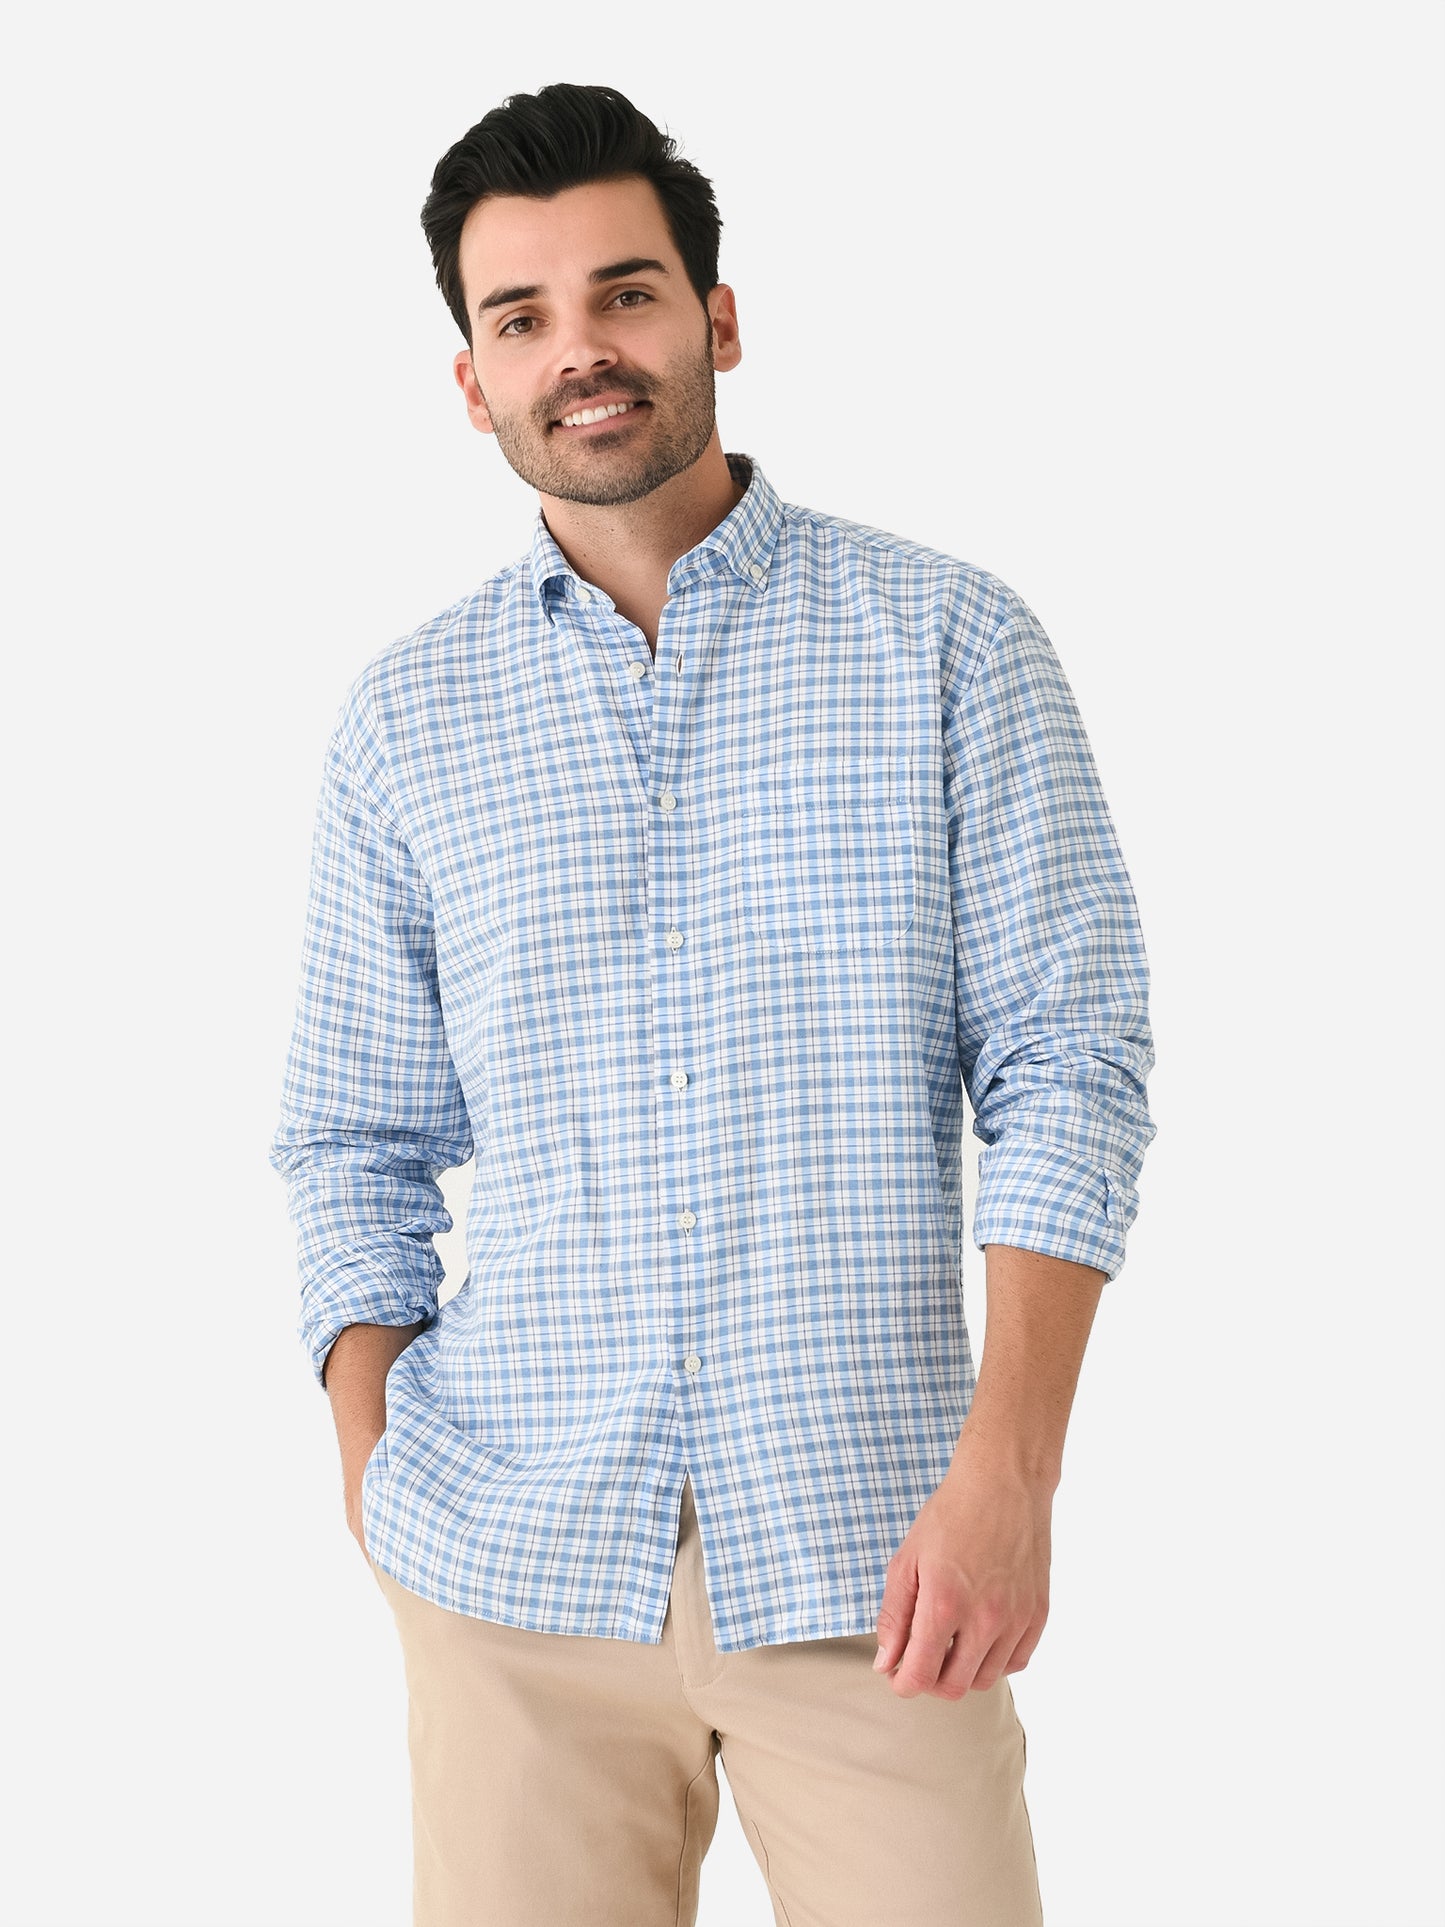 Miller Westby Men's Fennimore Button-Down Shirt